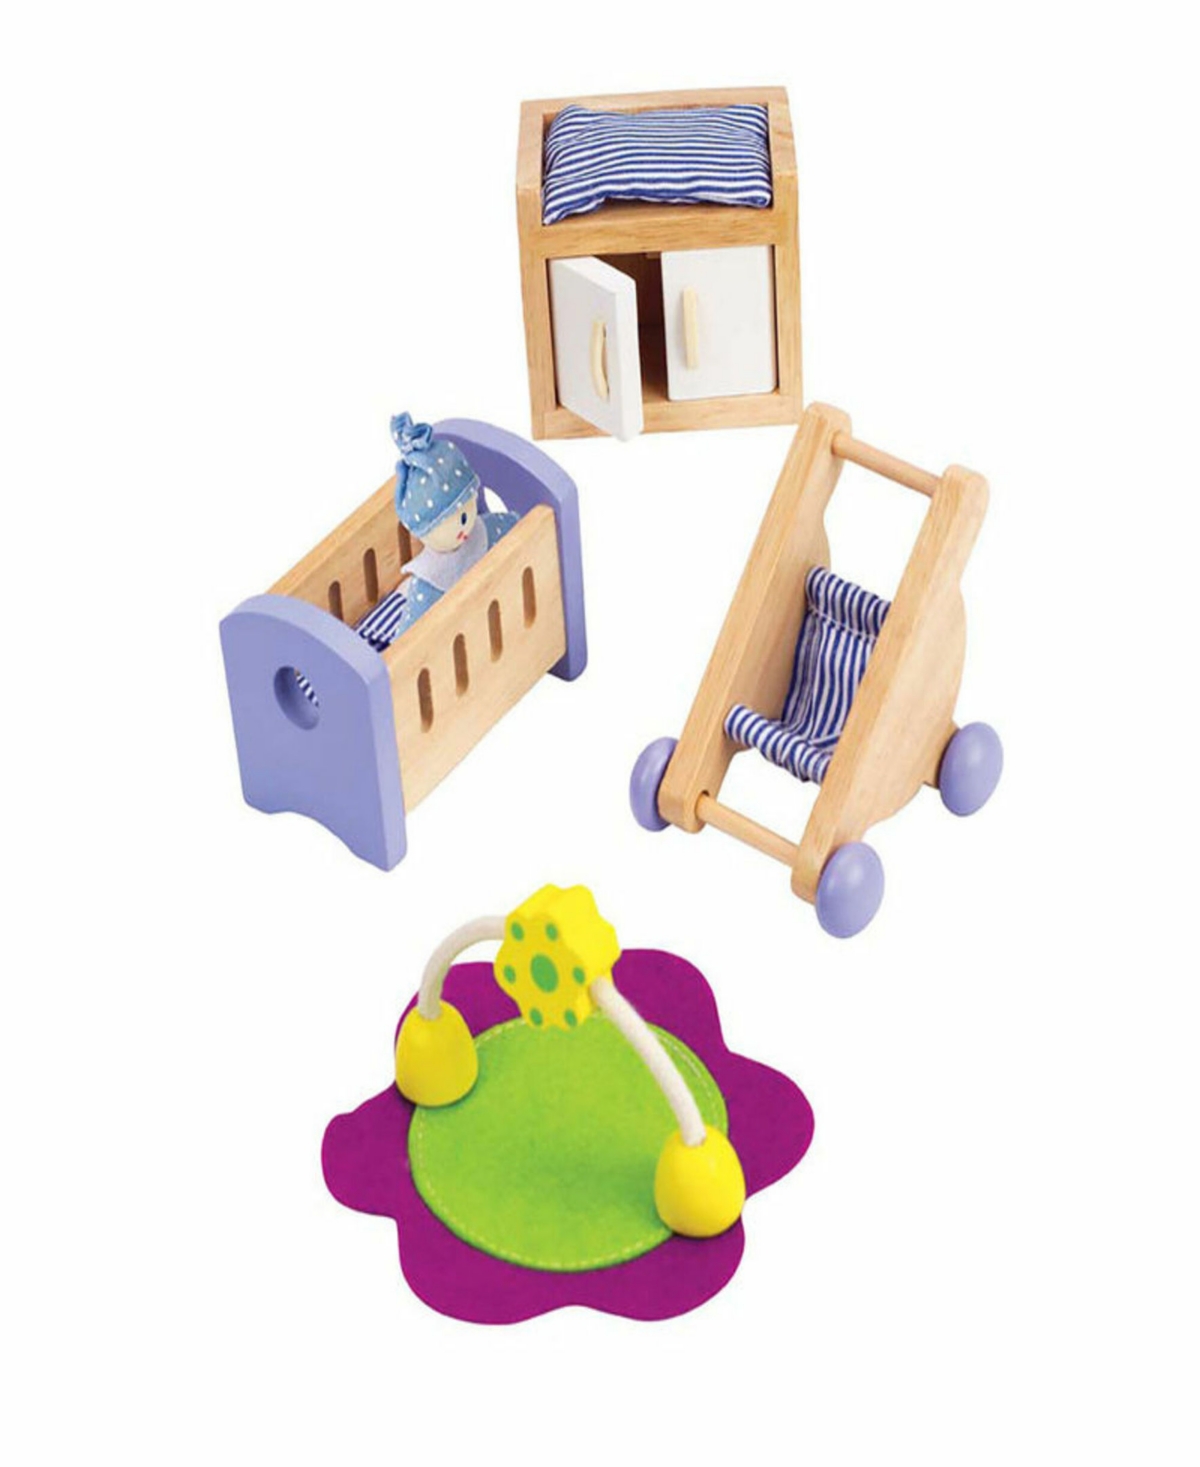 Hape Kids' Wooden Dollhouse Furniture Baby's Room Set In Multi